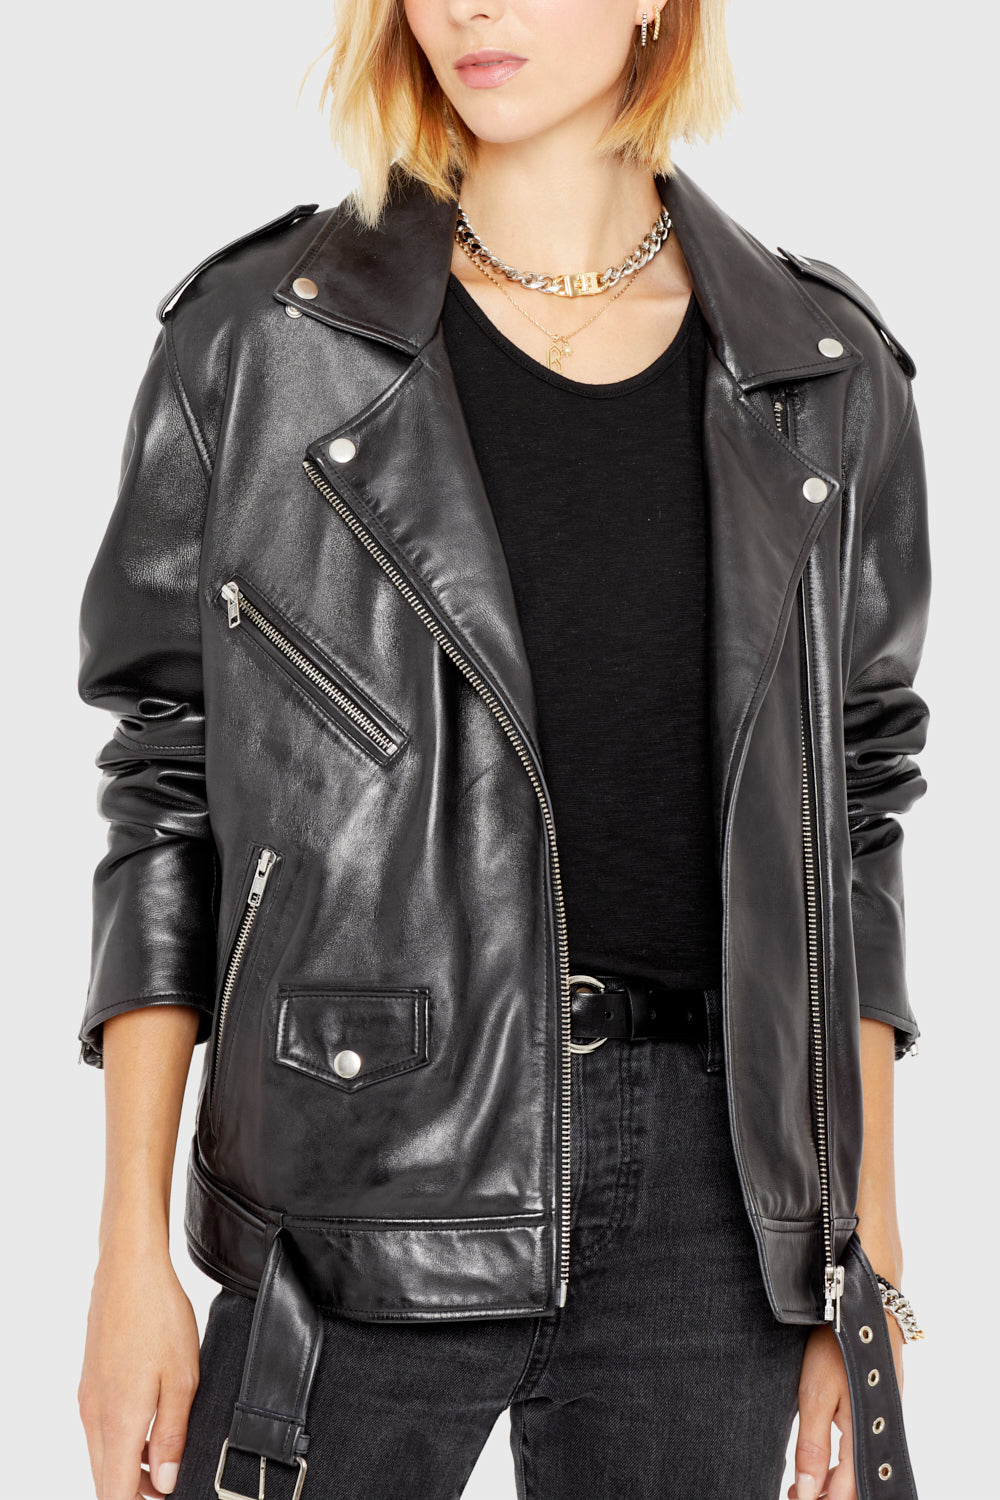 discount 54% Black M WOMEN FASHION Jackets Leatherette ONLY biker jacket 